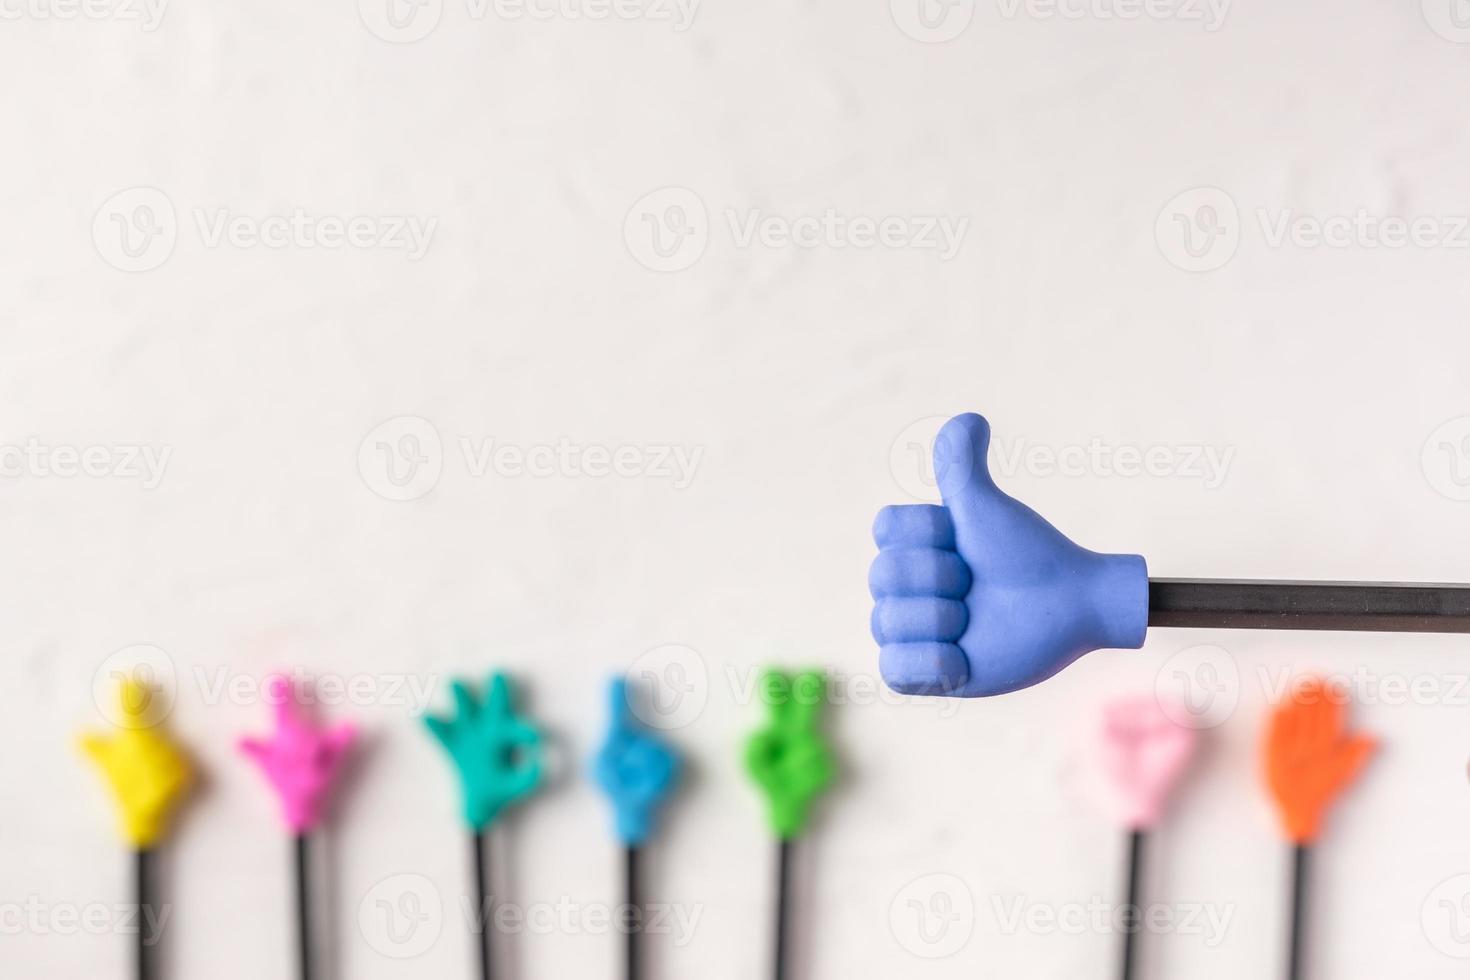 groep speelgoed duim omhoog handgebaar op potlood met witte pasta concrete achtergrond foto